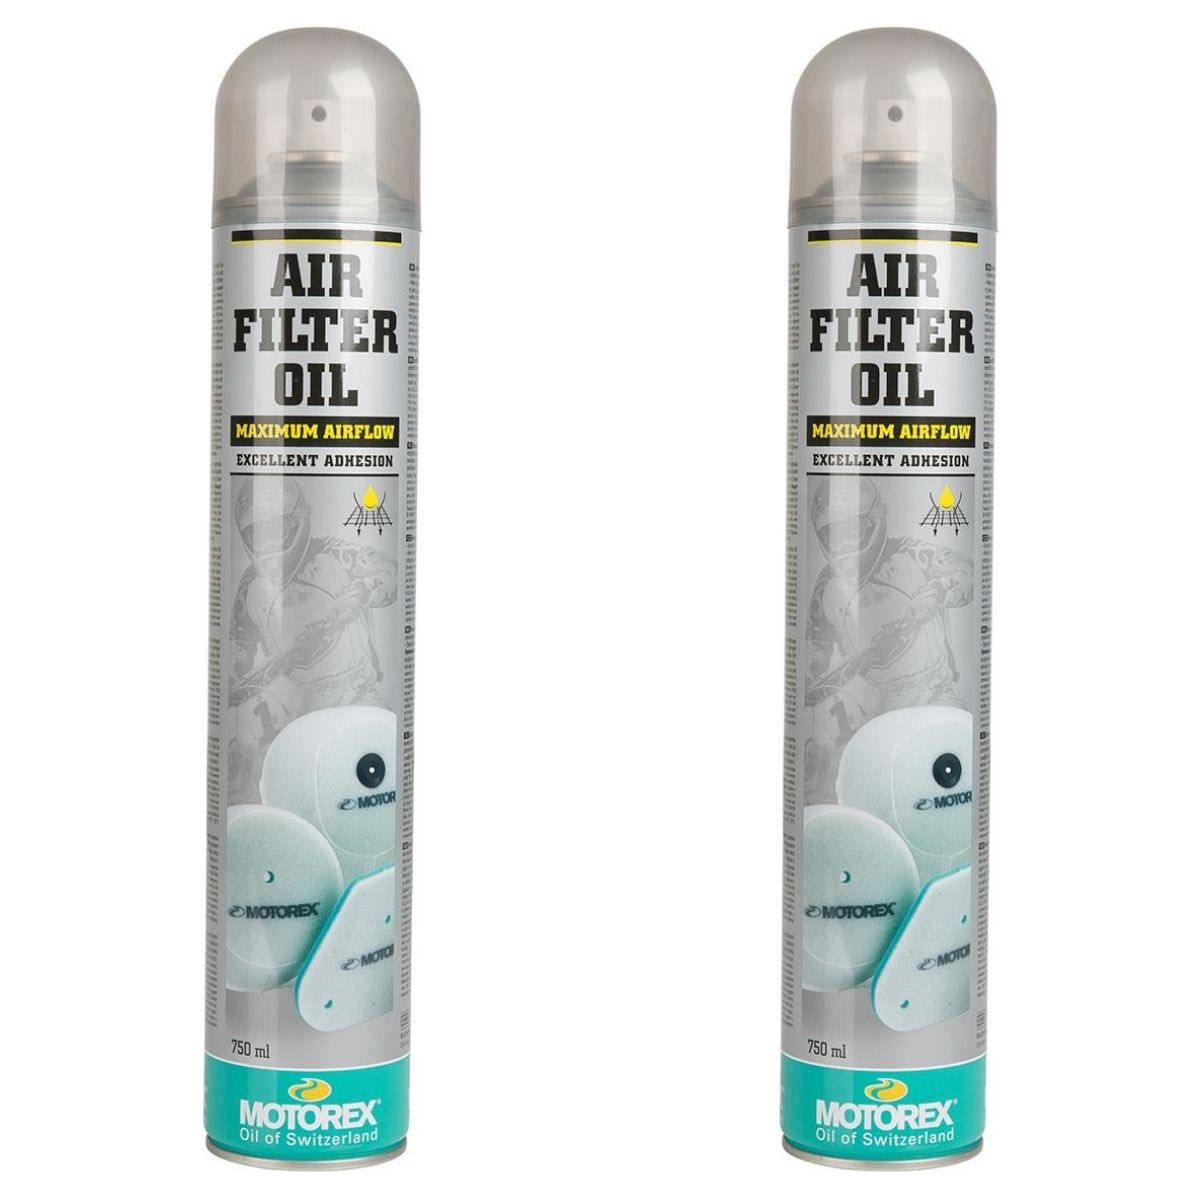 Motorex Air Filter Oil Spray  Set of 2, 750 ml each